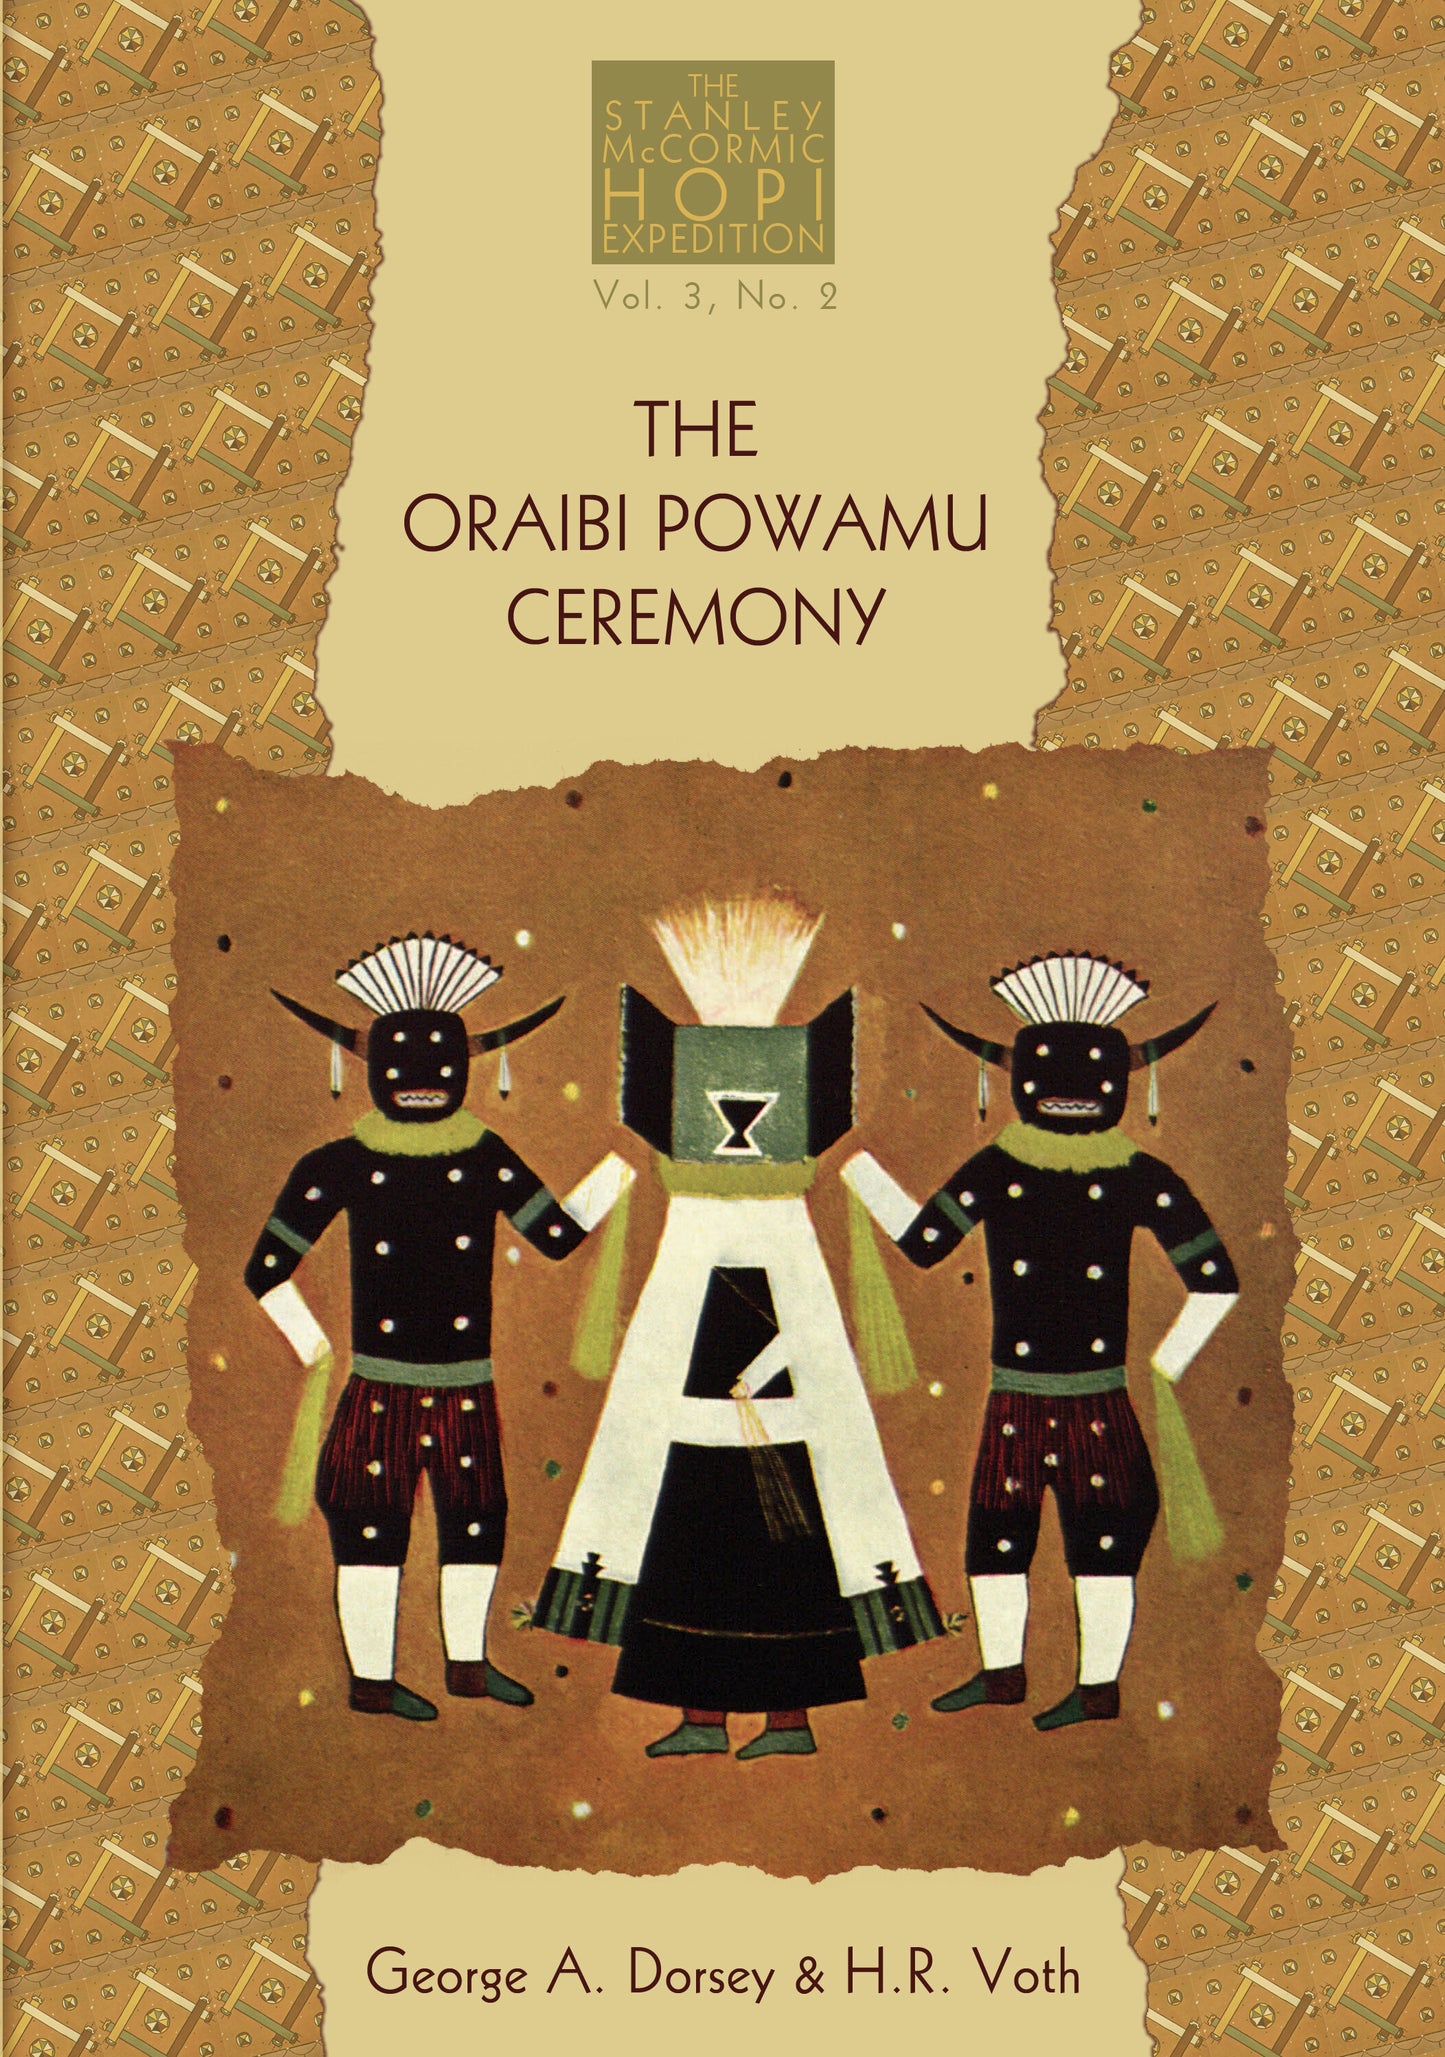 Oraibi Powamu Ceremony Volume 3 Number 2